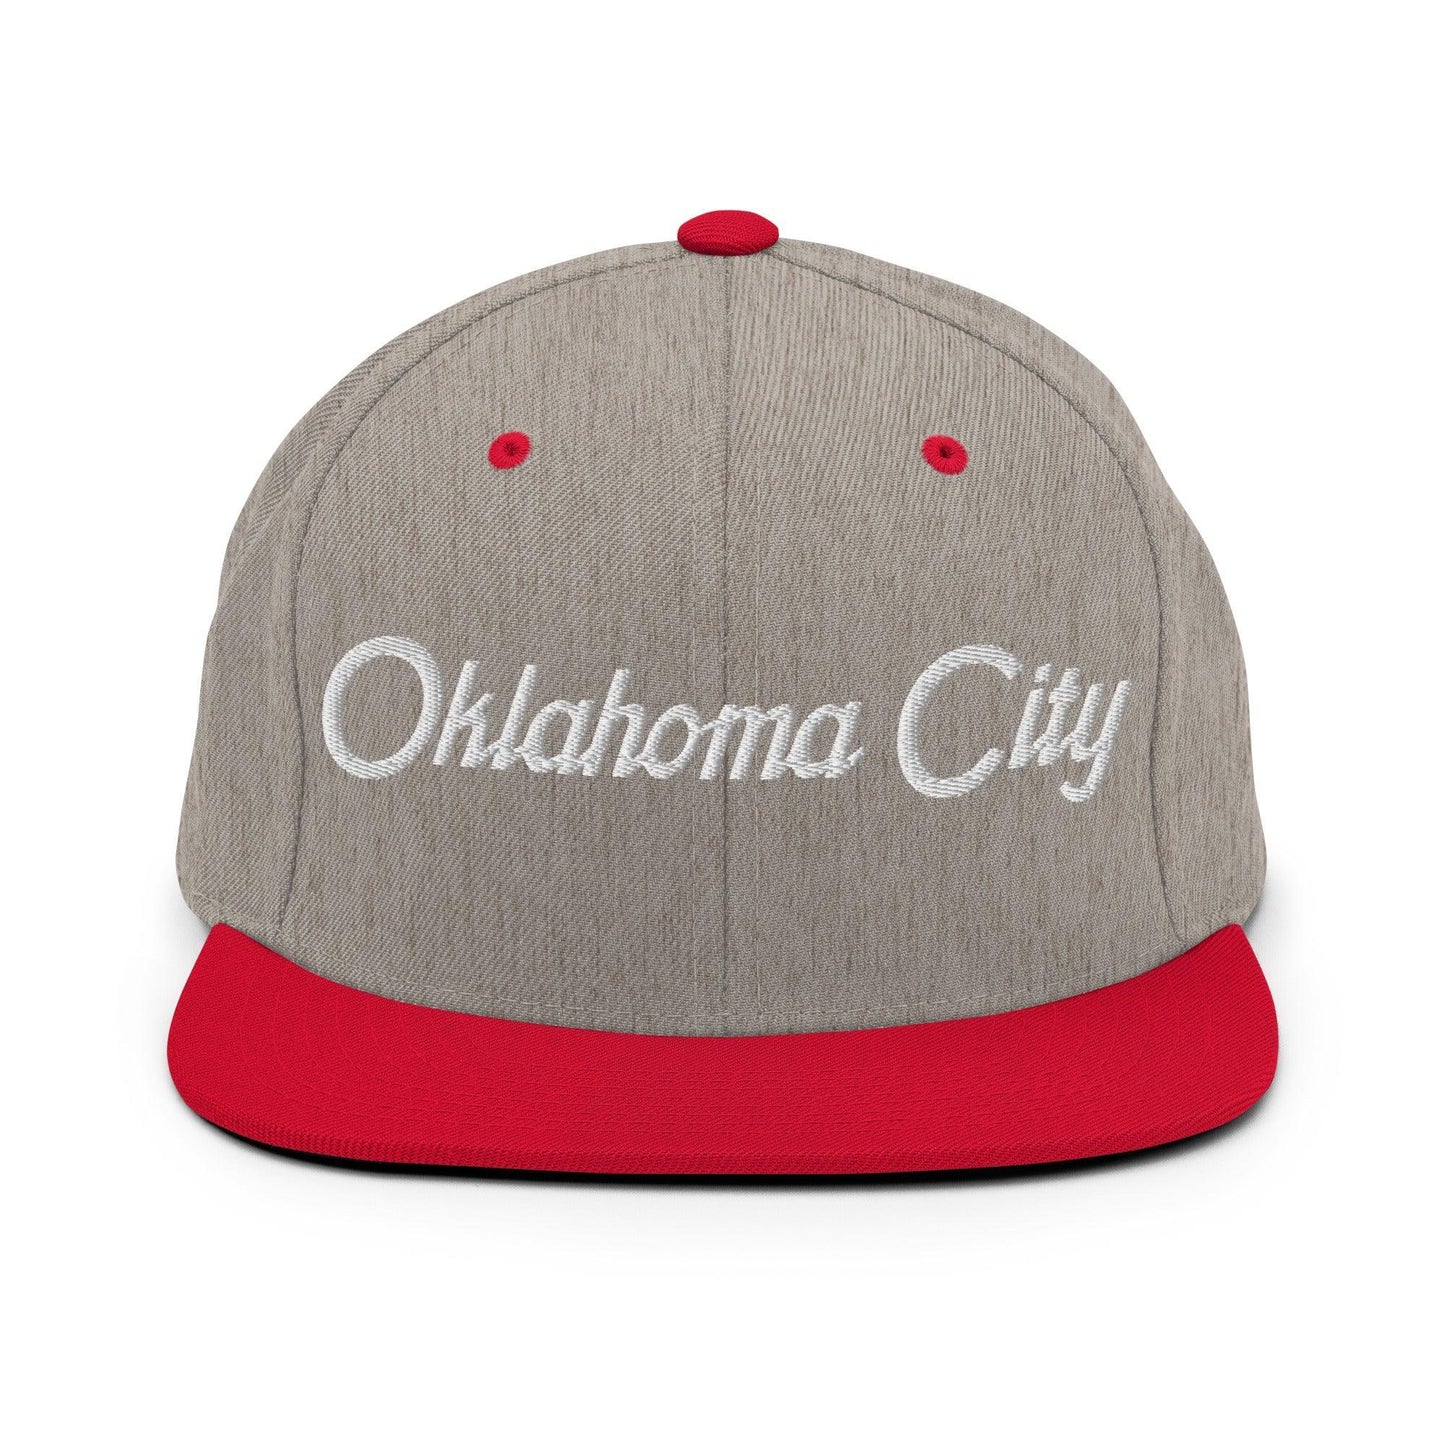 Oklahoma City Script Snapback Hat Heather Grey Red